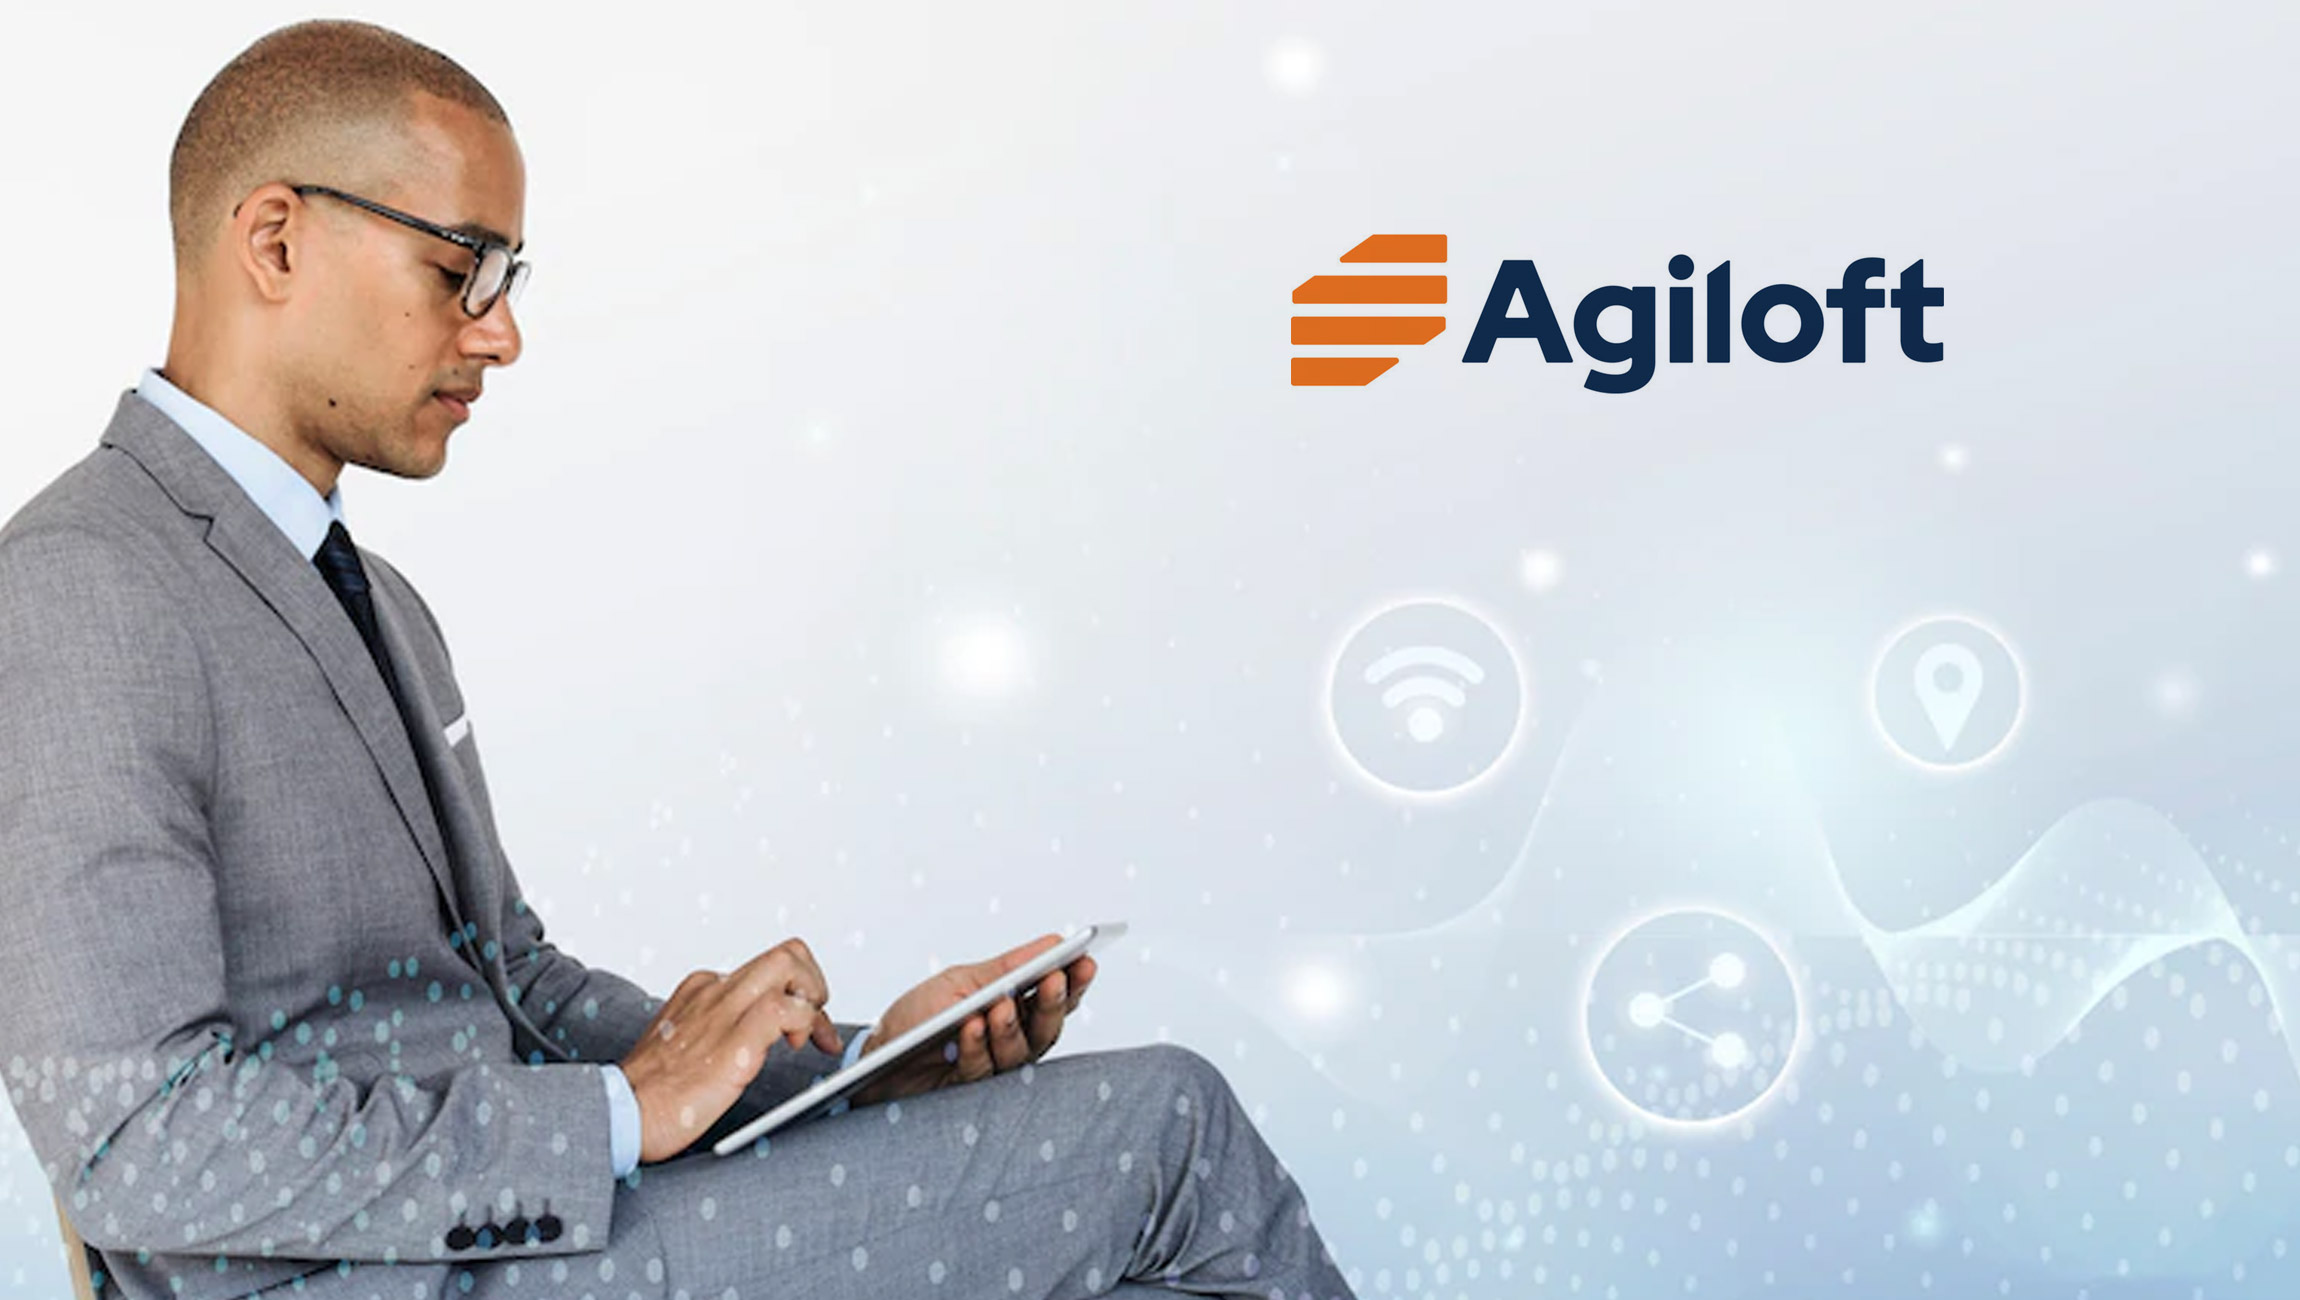 Agiloft-Announces-Update-to-Contract-Lifecycle-Management-App-on-Salesforce-AppExchange_-the-World's-Leading-Enterprise-Cloud-Marketplace